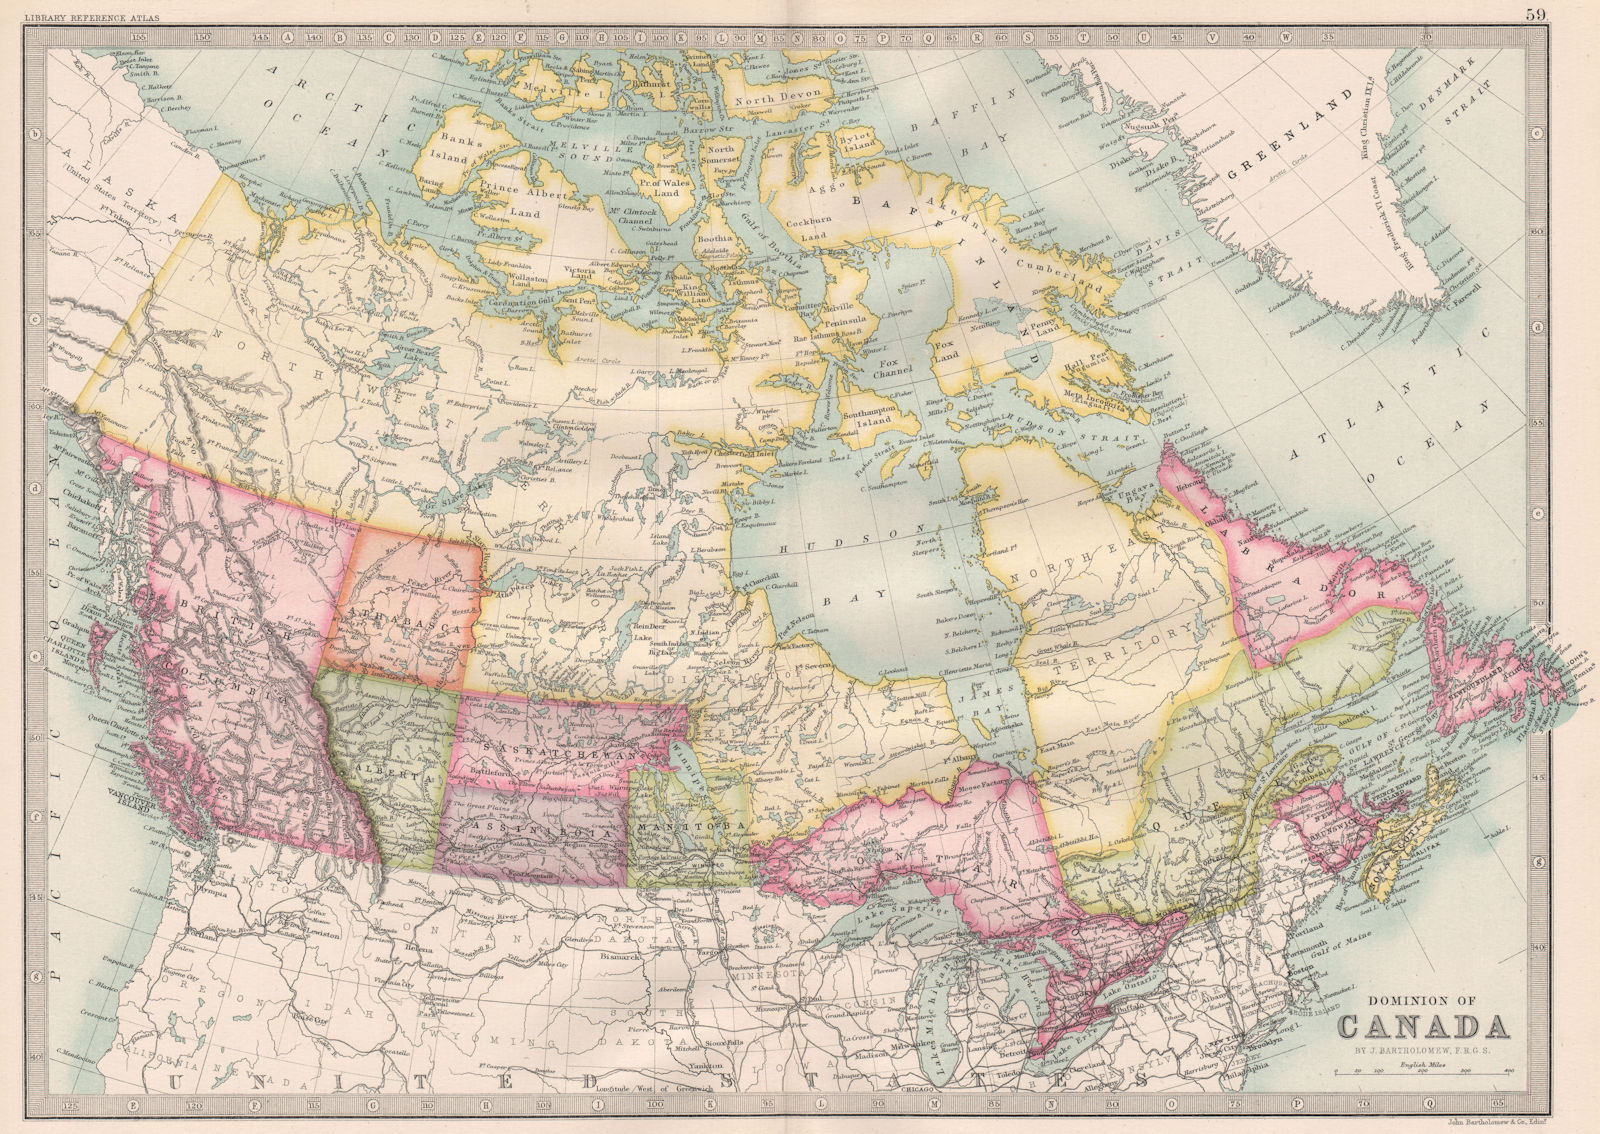 CANADA. Dominion of Canada. Showing provinces. BARTHOLOMEW 1890 old map